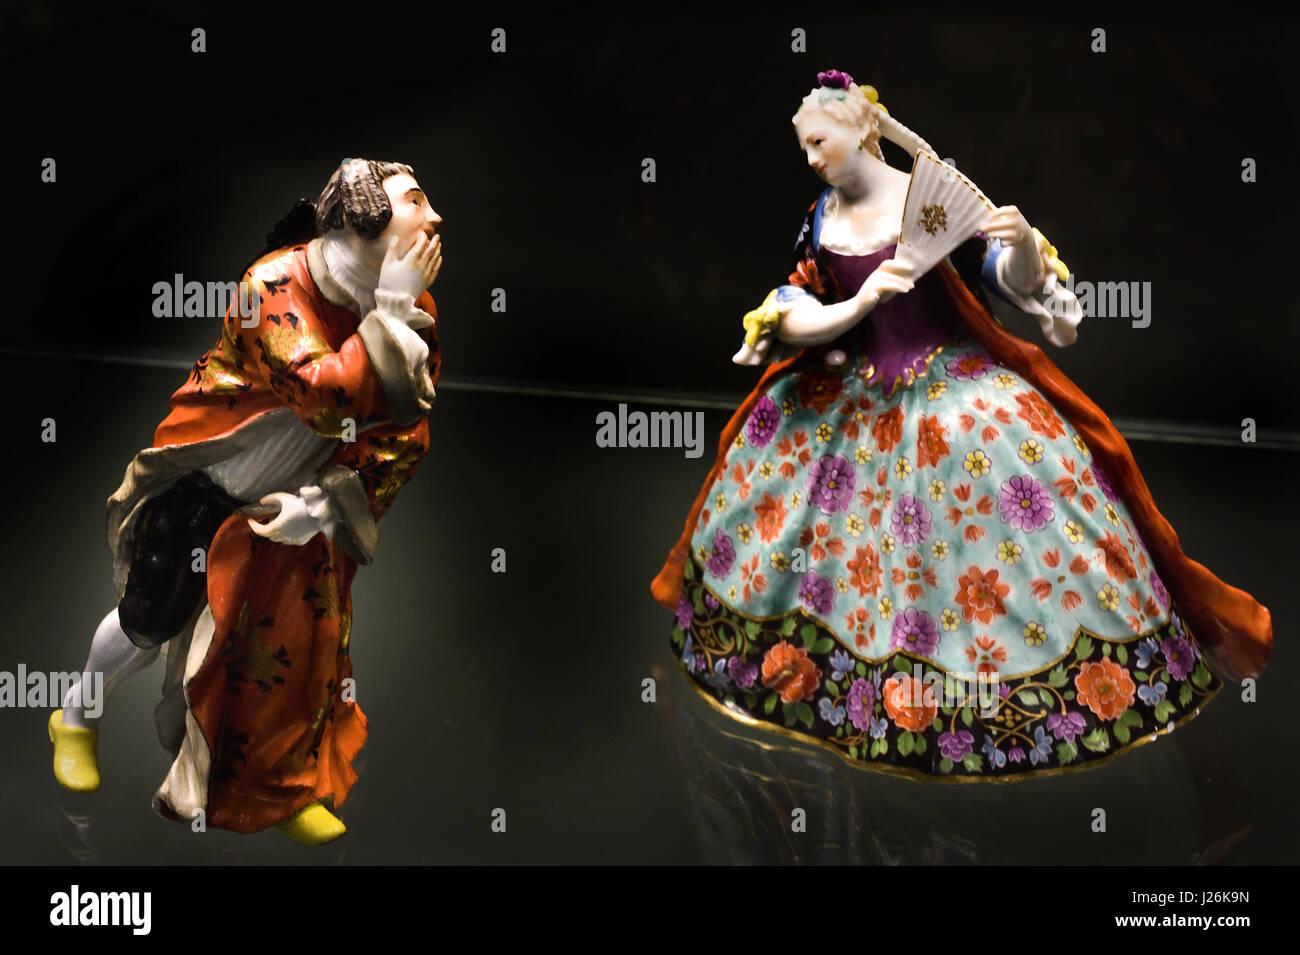 In Liebespaar Spanischem Kostüm - amore matura in costume Spagnolo 1740 , da Johann Joachim Kändler ,1706 - 1775) era il più importante modeller della porcellana di Meissen manufactory. Germania Foto Stock